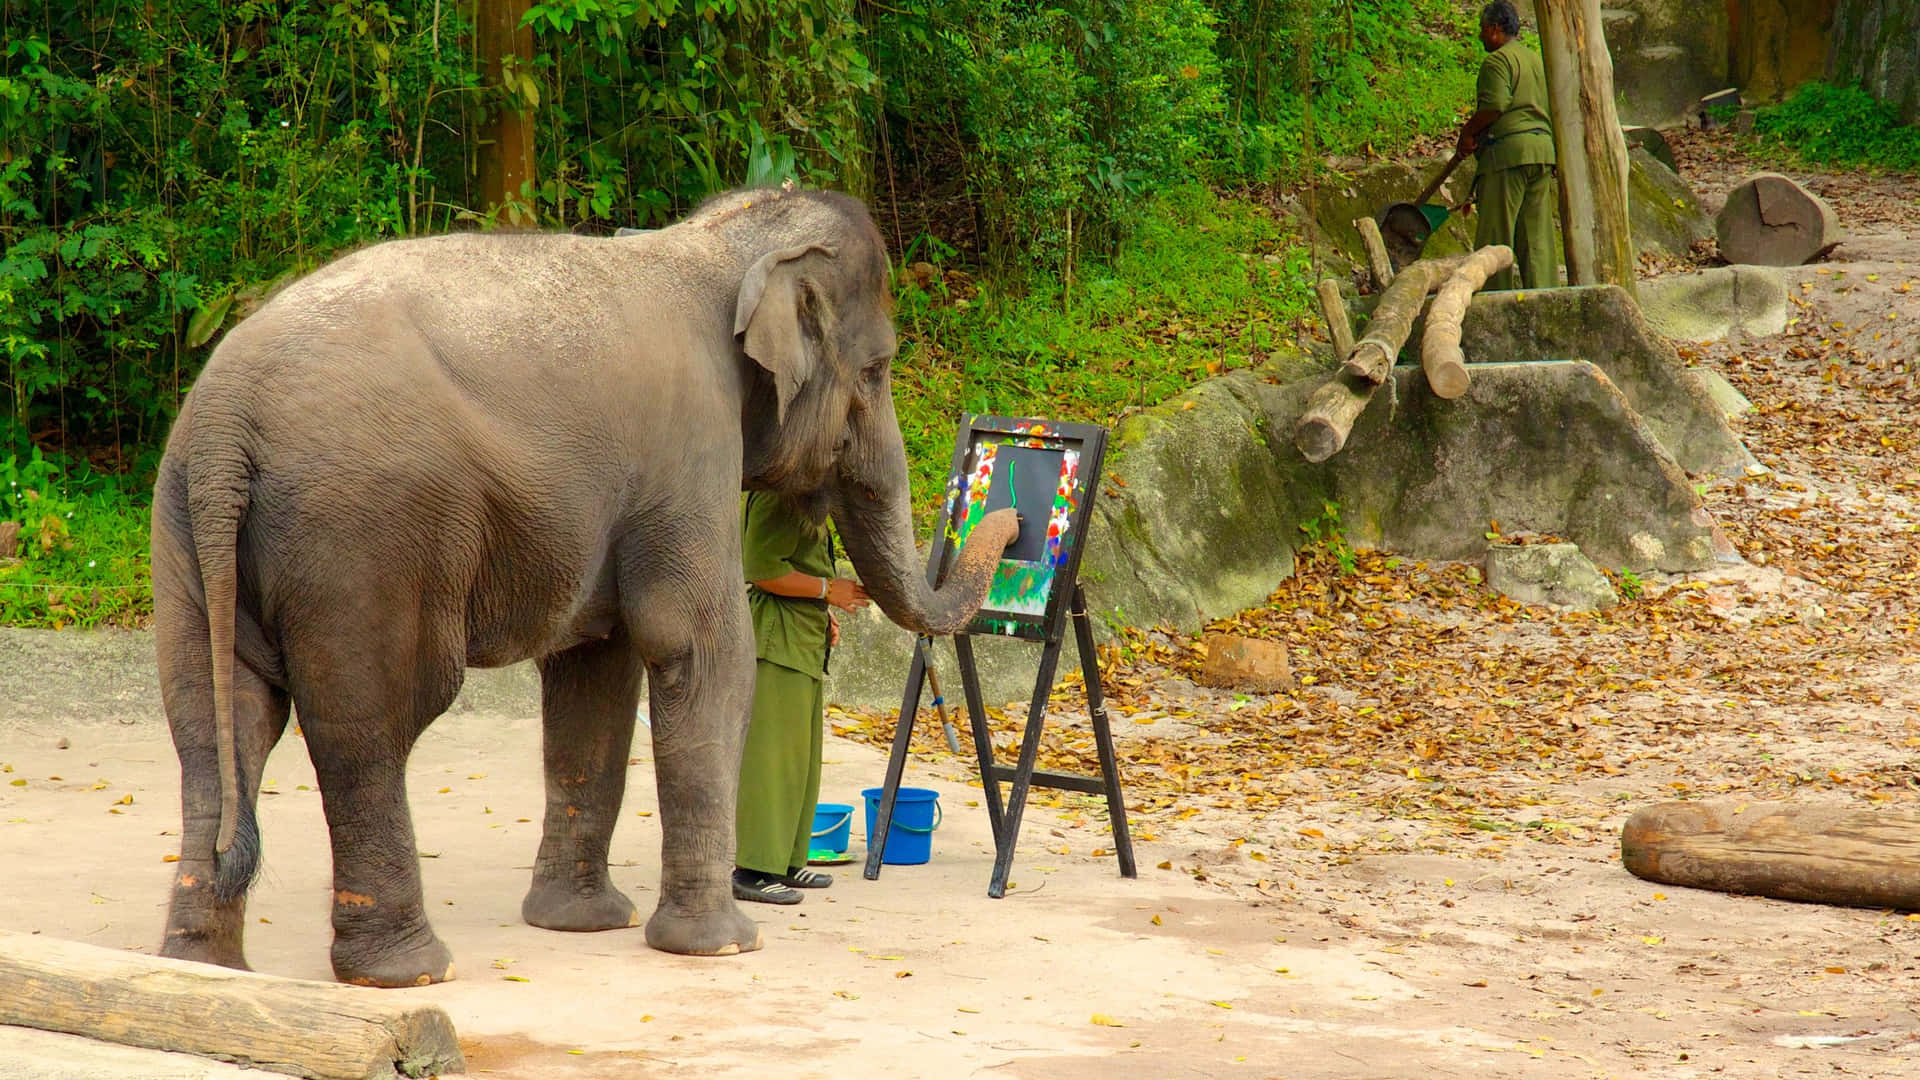 Elephant Painting Activity Singapore Zoo Wallpaper